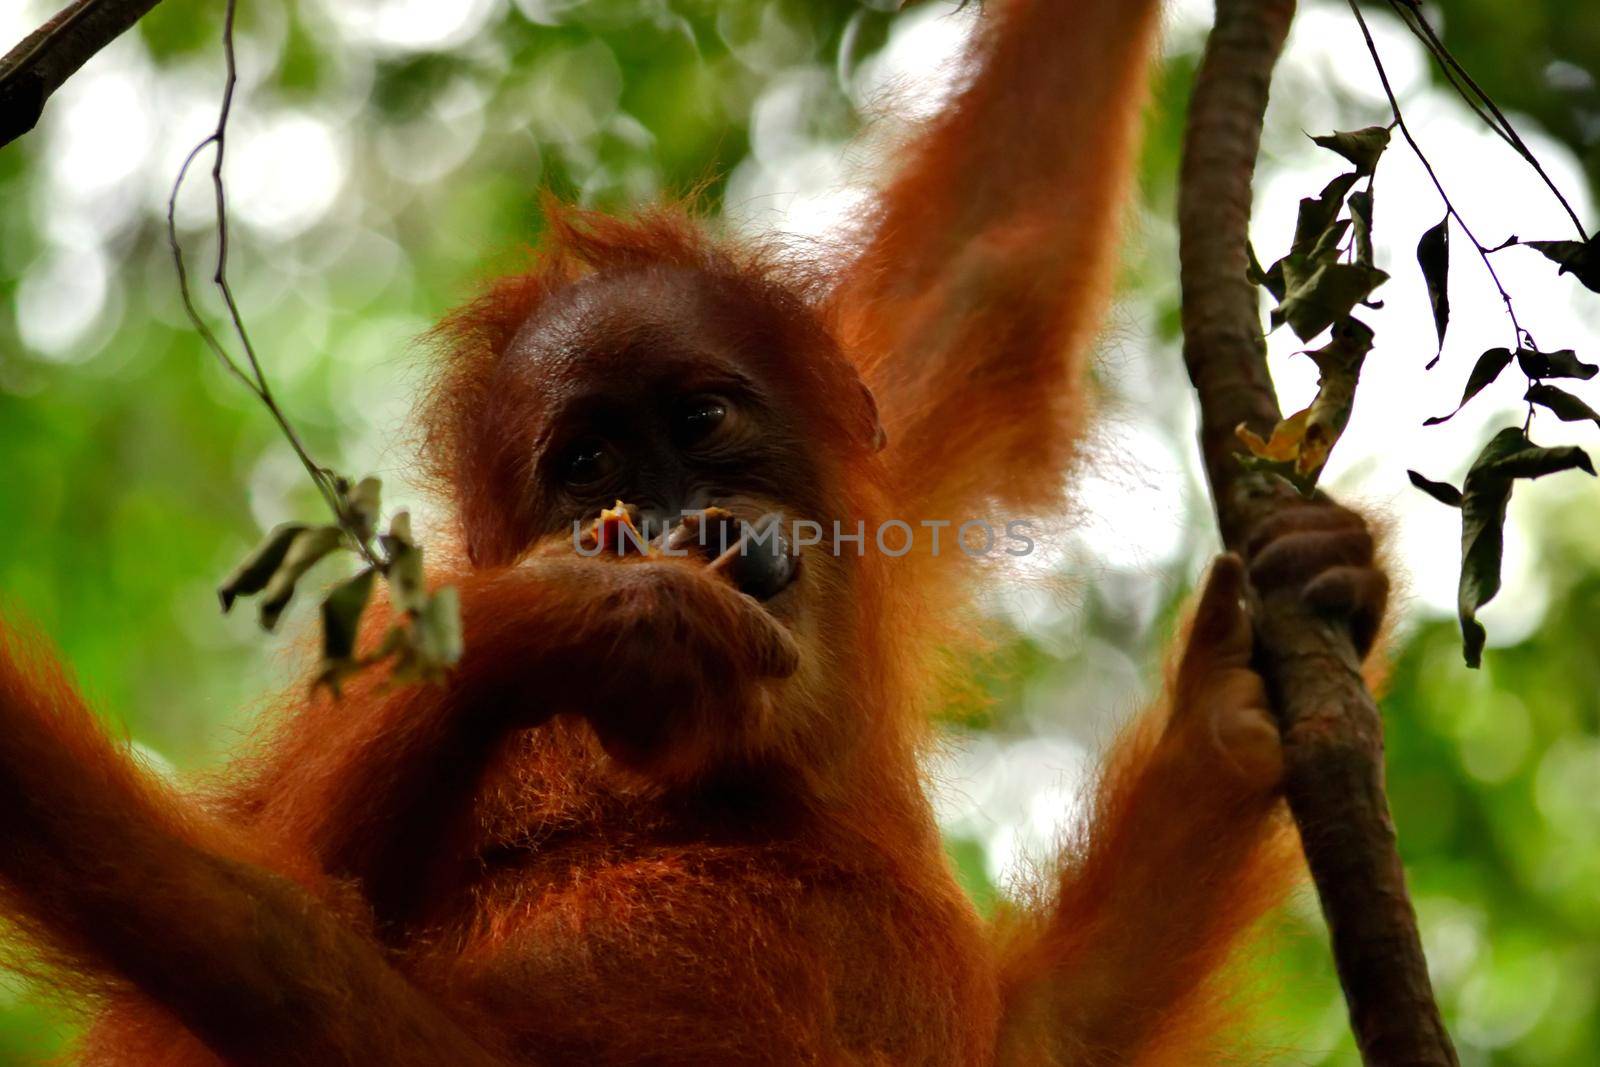 Sumatran orangutan cub in the Gunung Leuser National Park, Indonesia